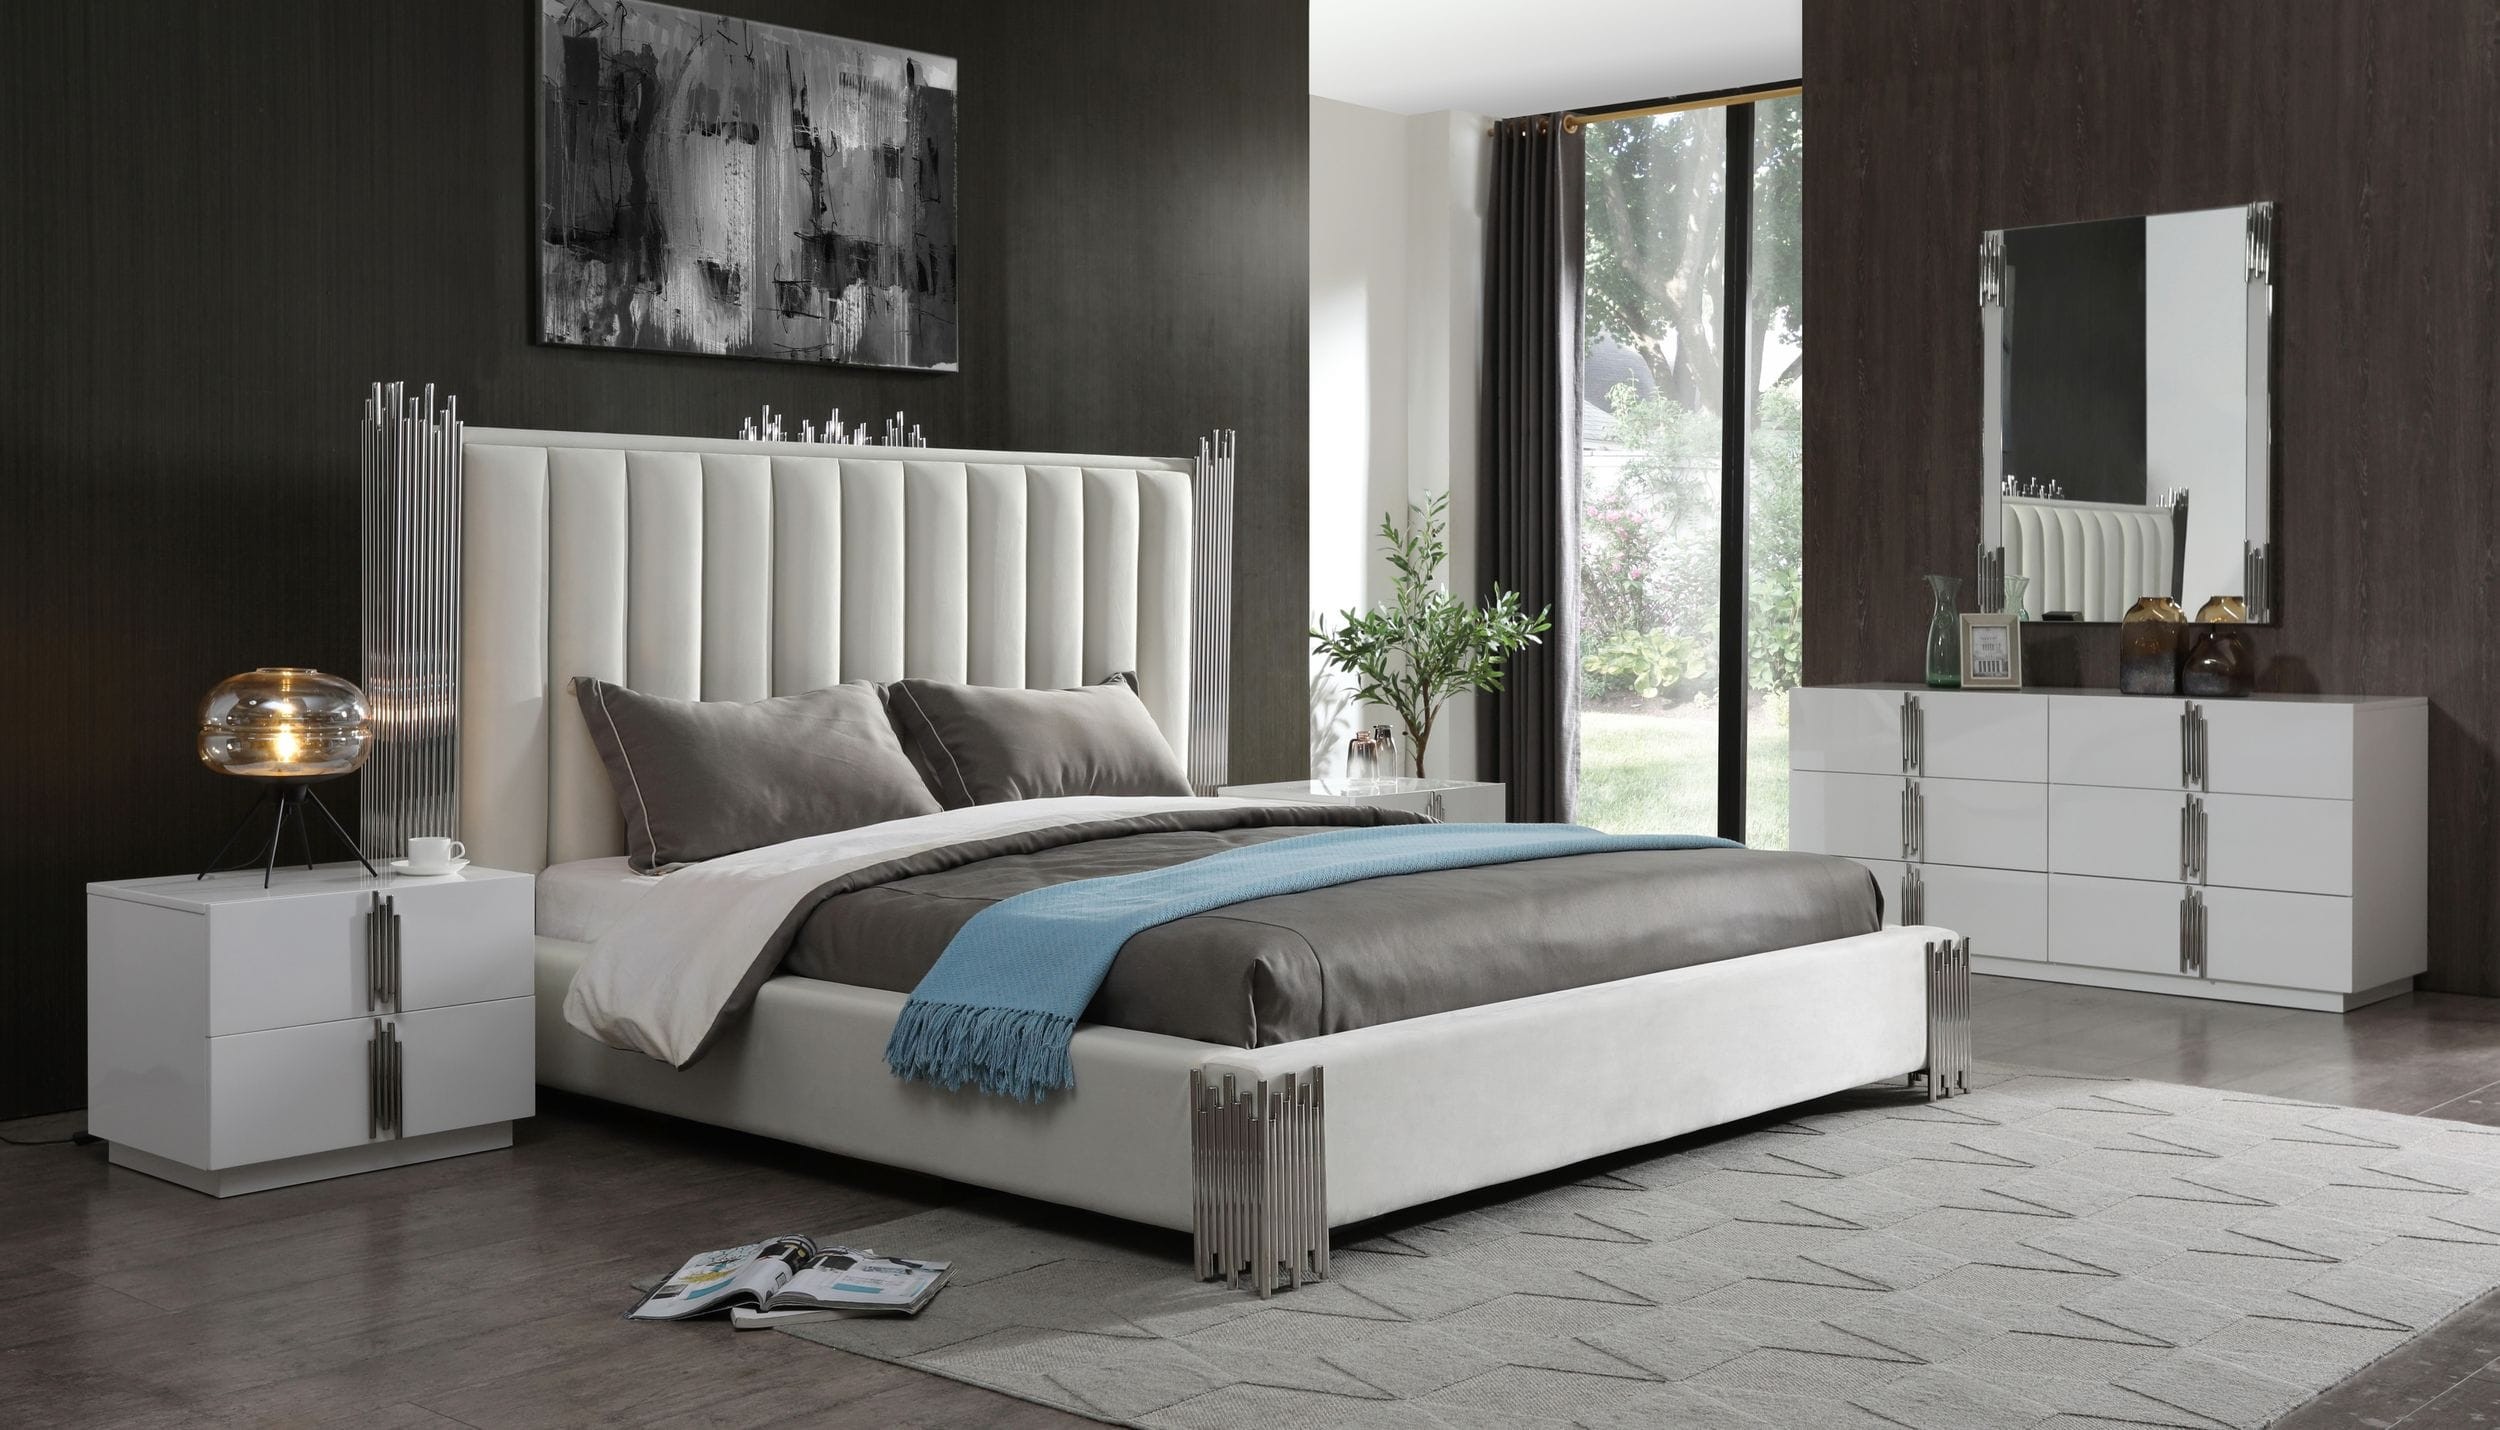 bedroom furniture stainless steel